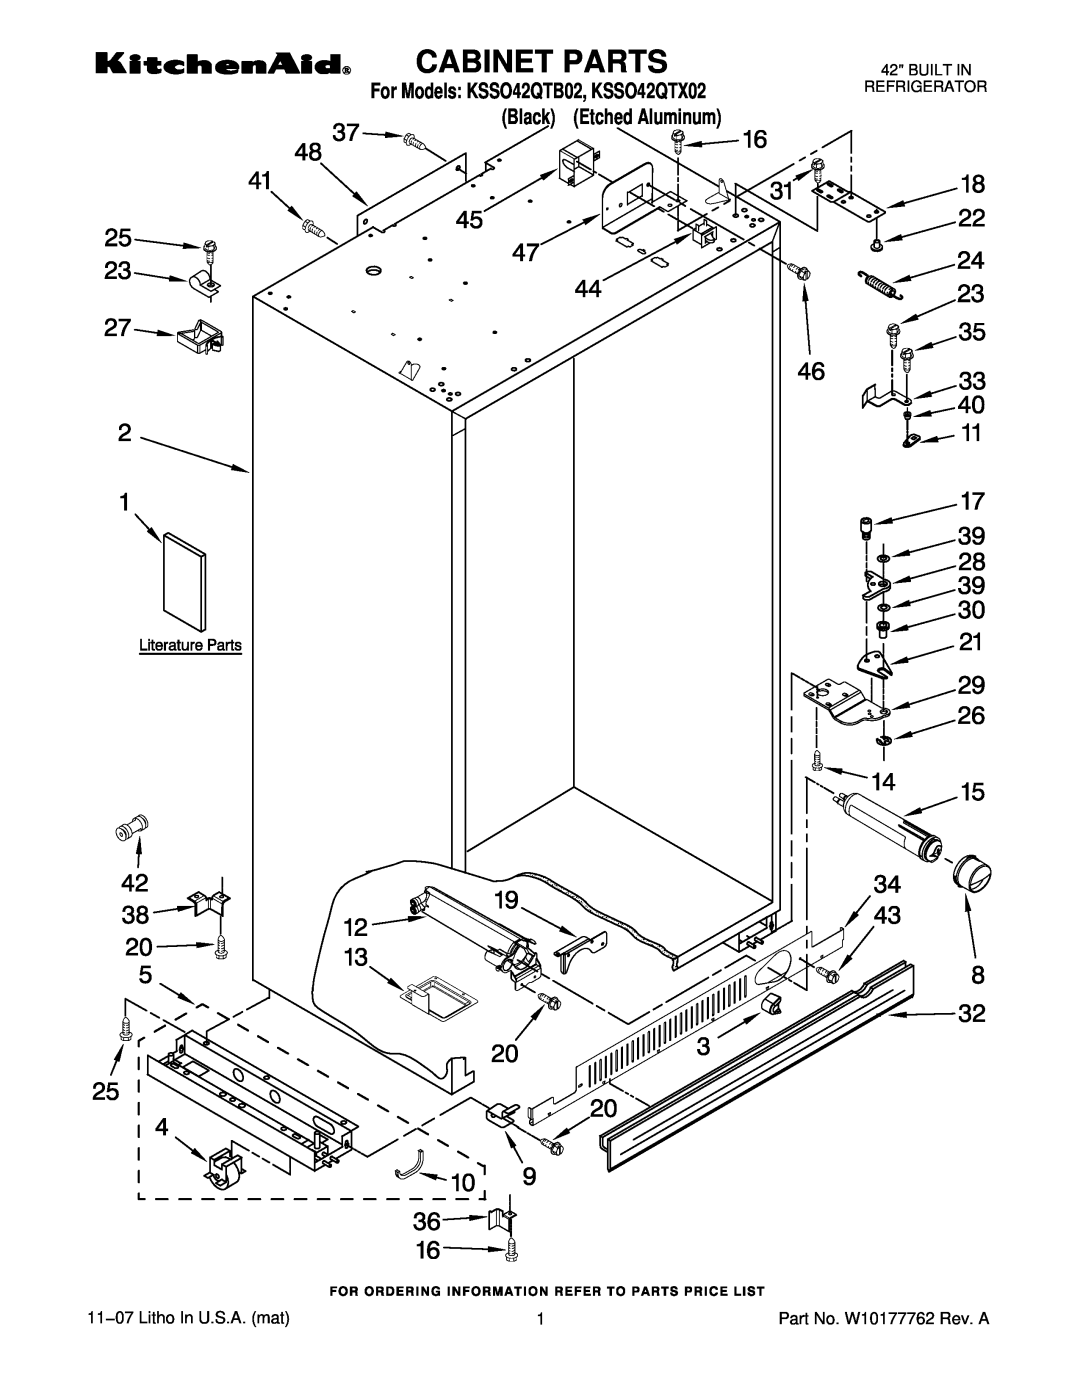 KitchenAid KSSO42QTX02 manual Cabinet Parts, 11−07 Litho In U.S.A. mat, Built In Refrigerator, Part No. W10177762 Rev. A 